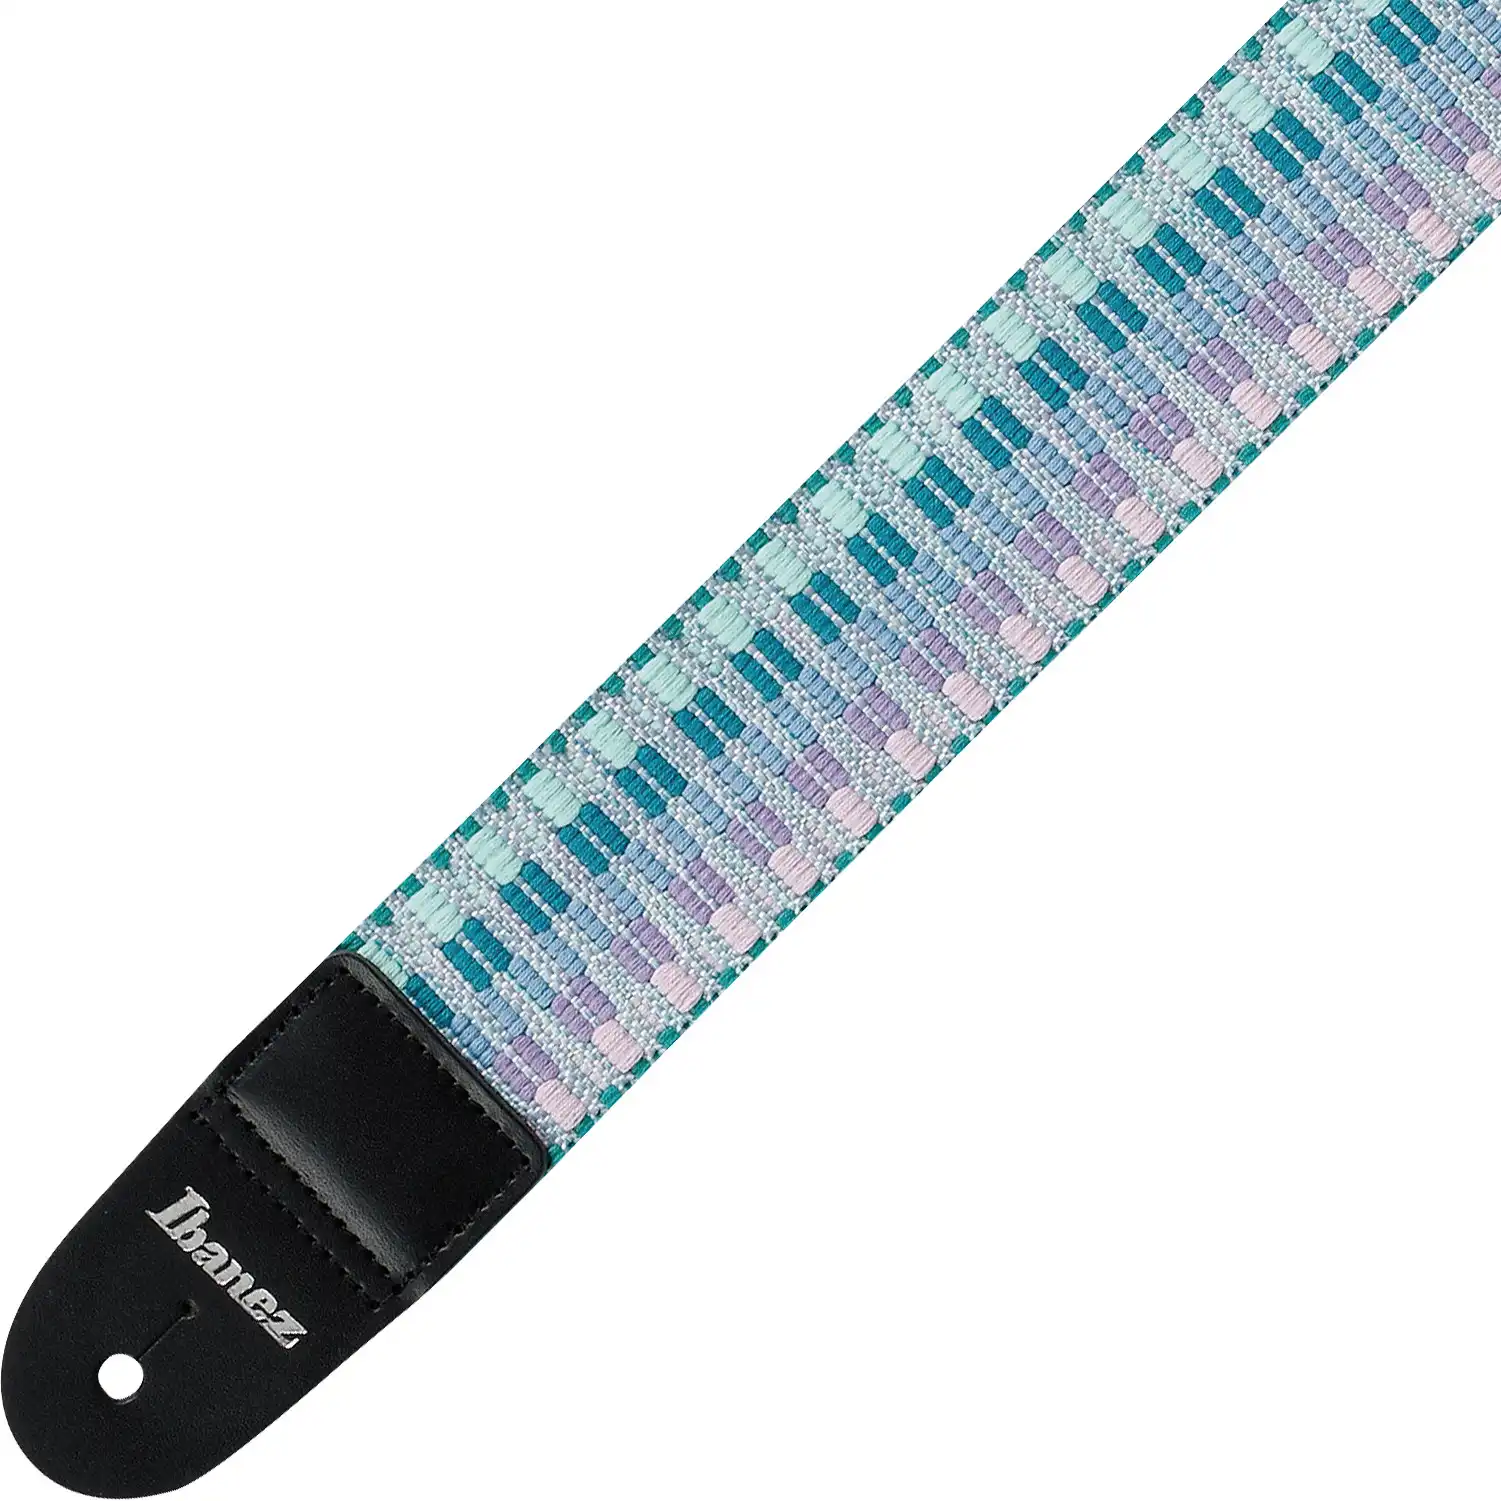 Gurt Ibanez GSB50-C5 braided mint/purple